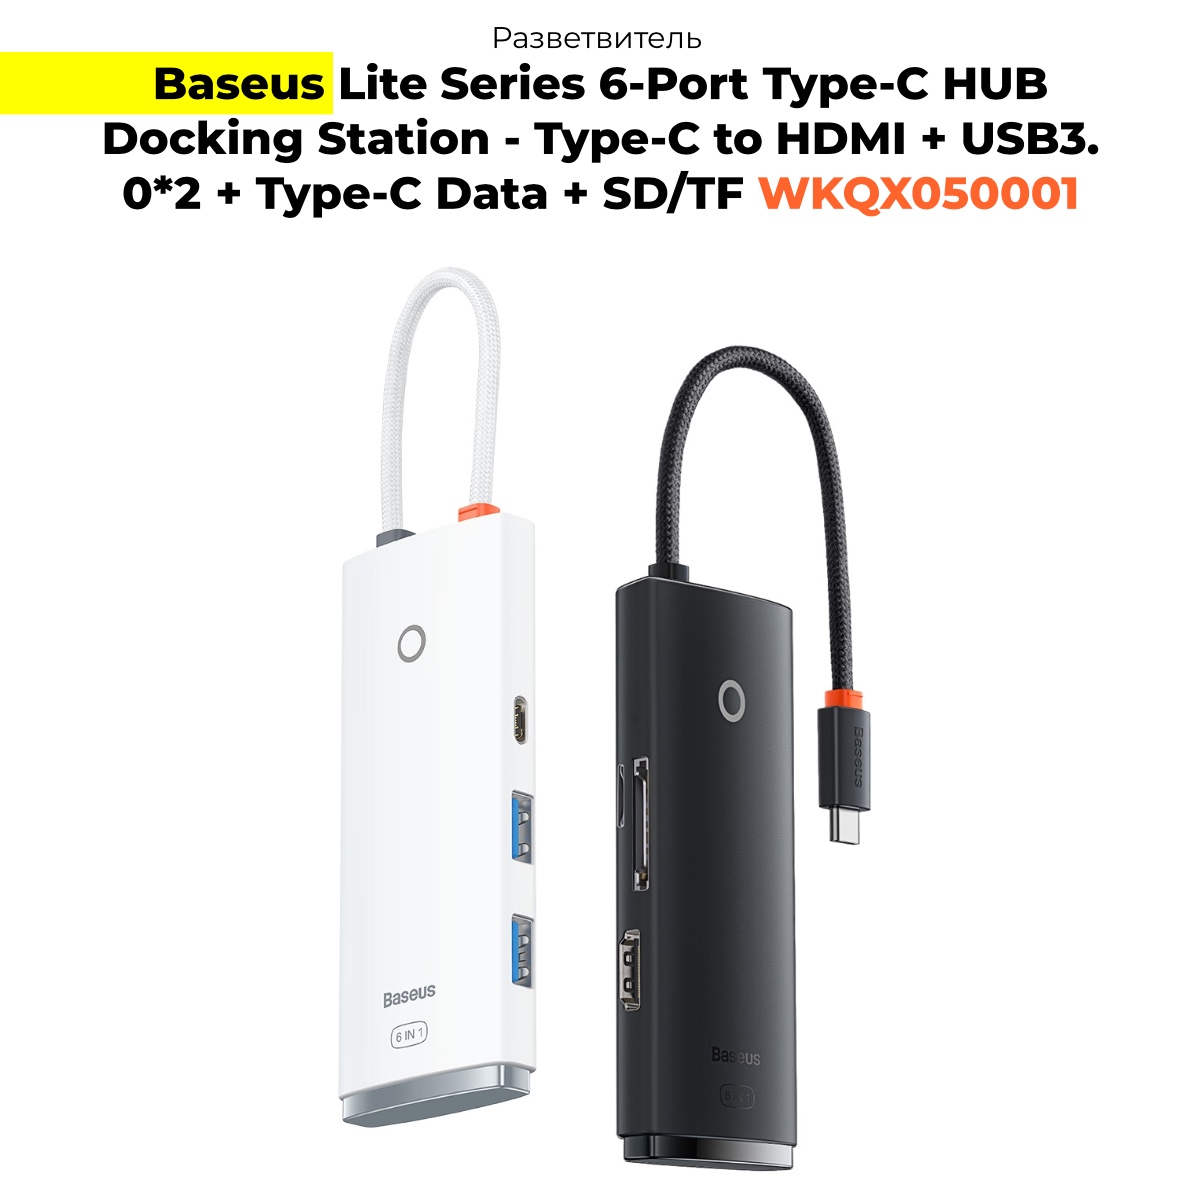 Baseus-Lite-Series-6-Port-WKQX050001-01